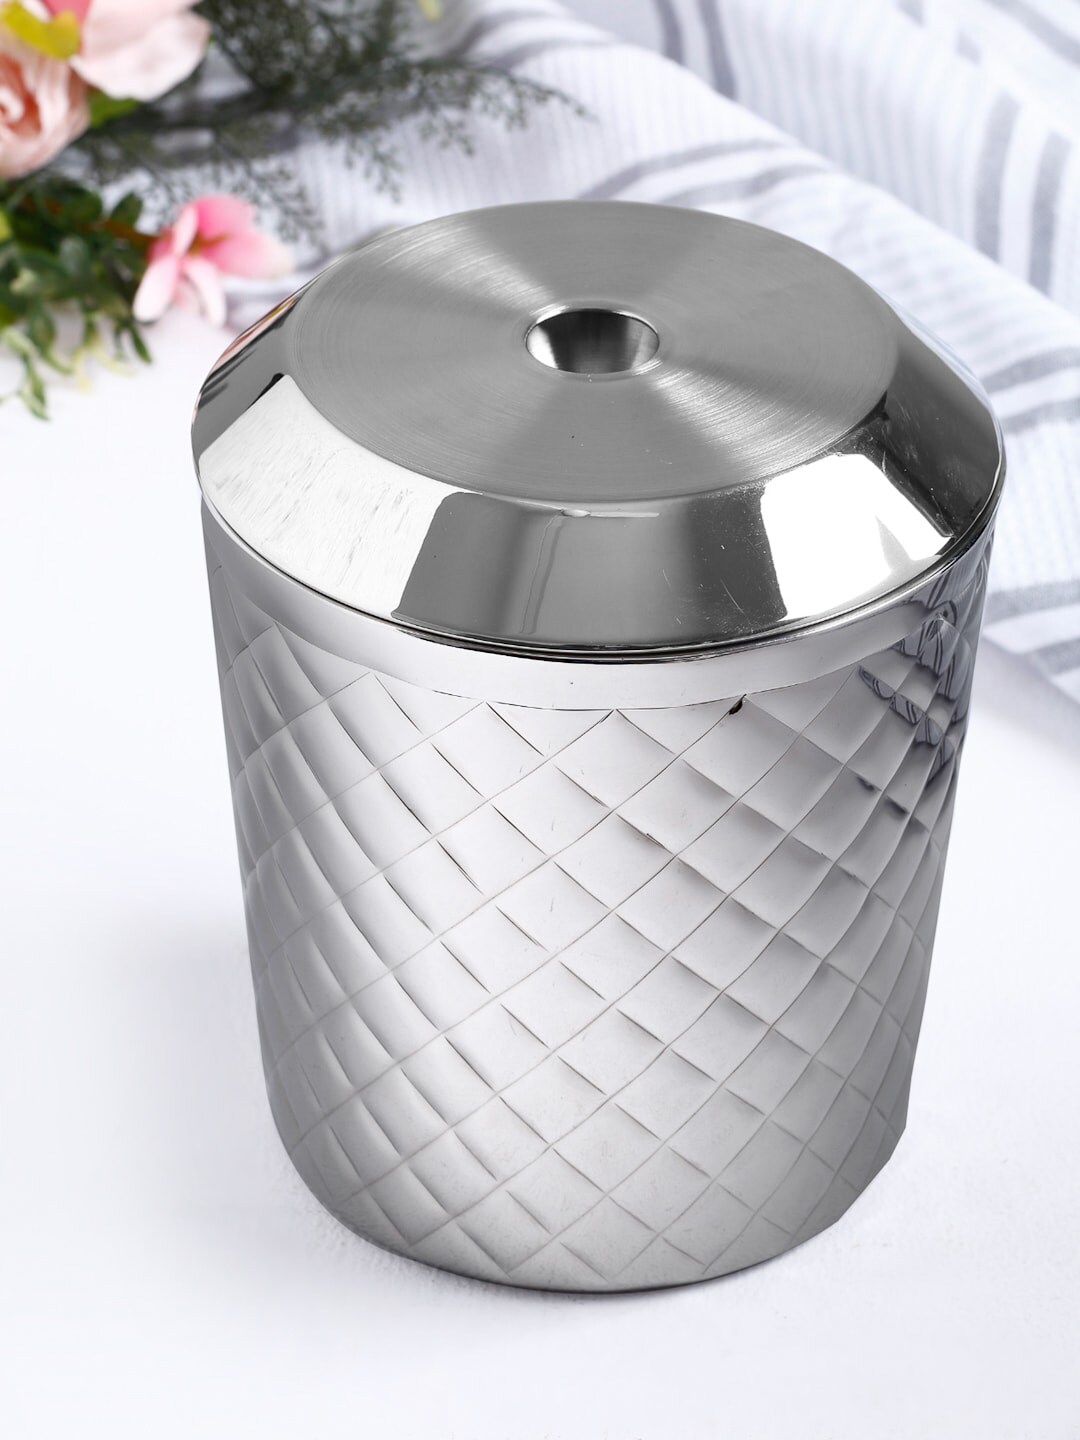 ARTTDINOX Silver-Toned Textured Stainless Steel Shell Ice Bucket Price in India